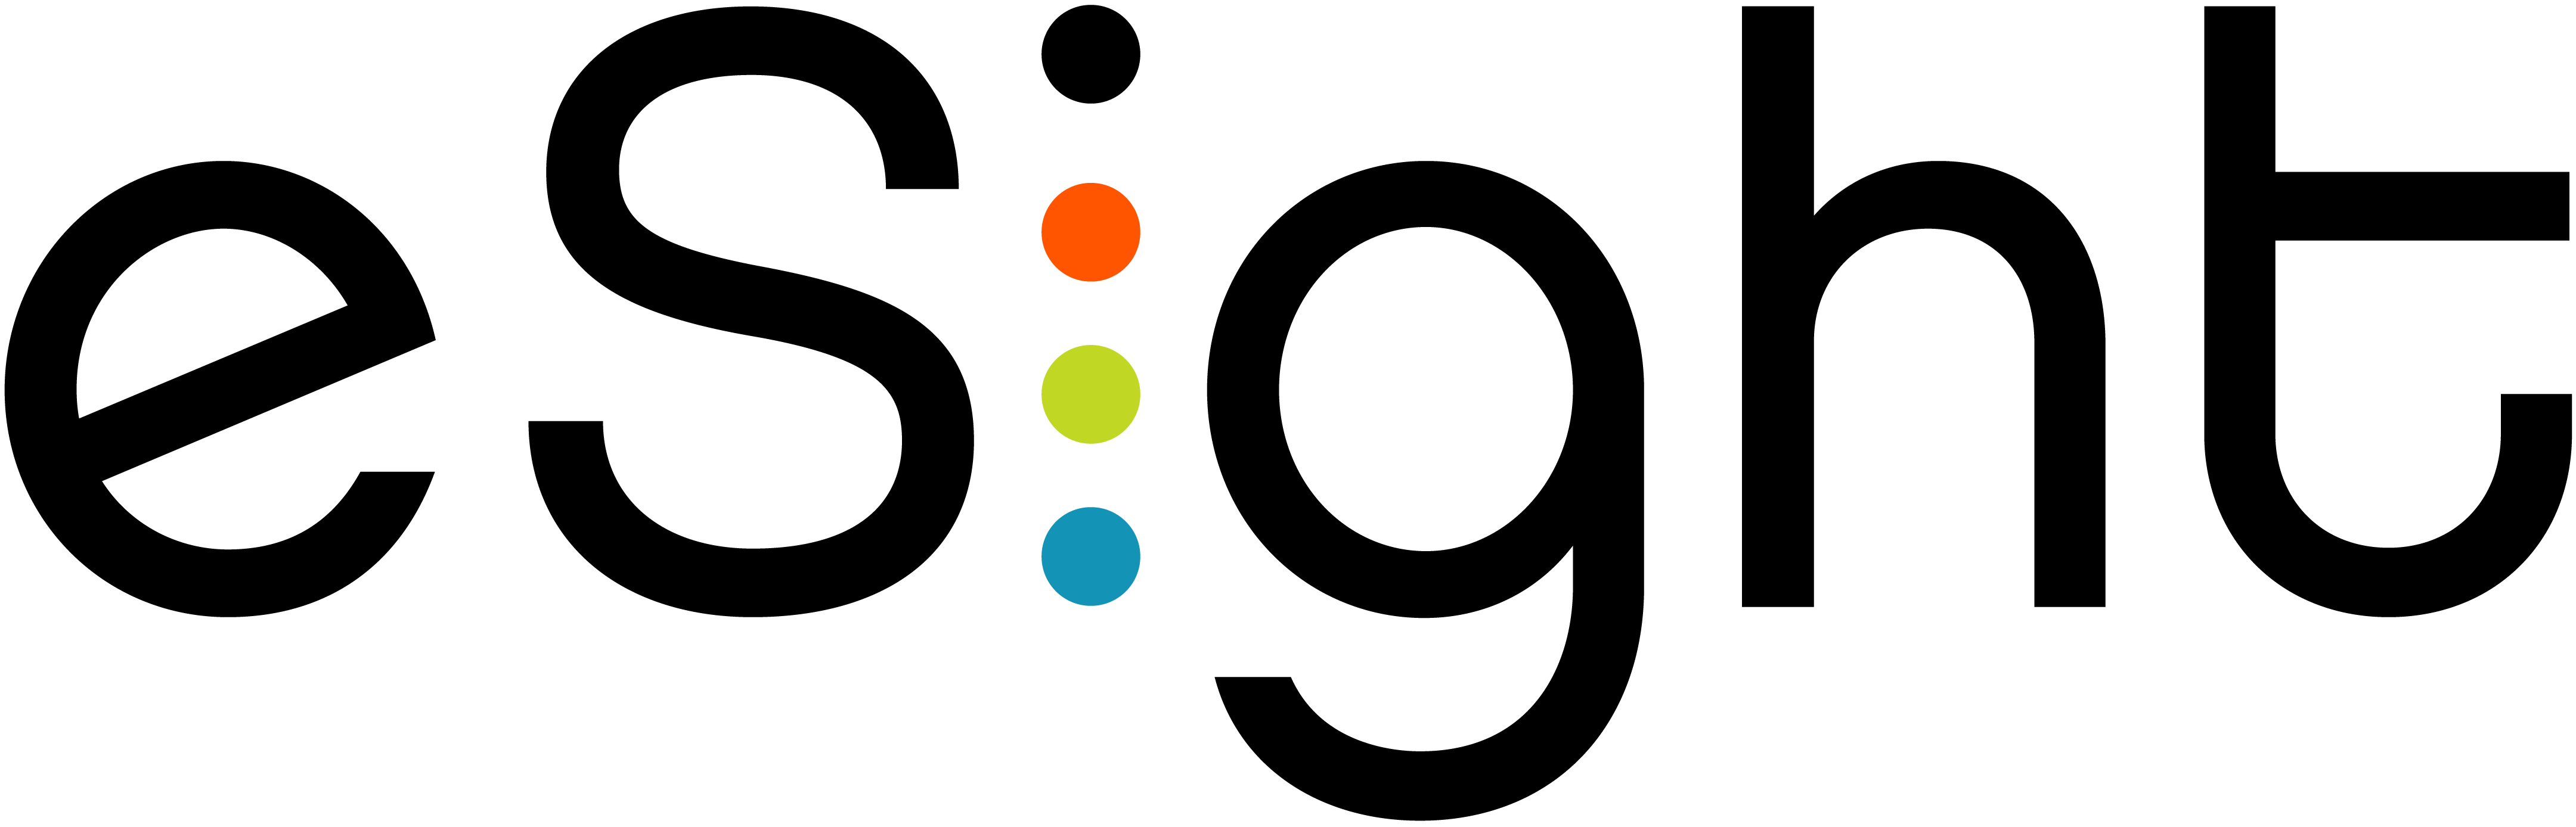 eSight logo